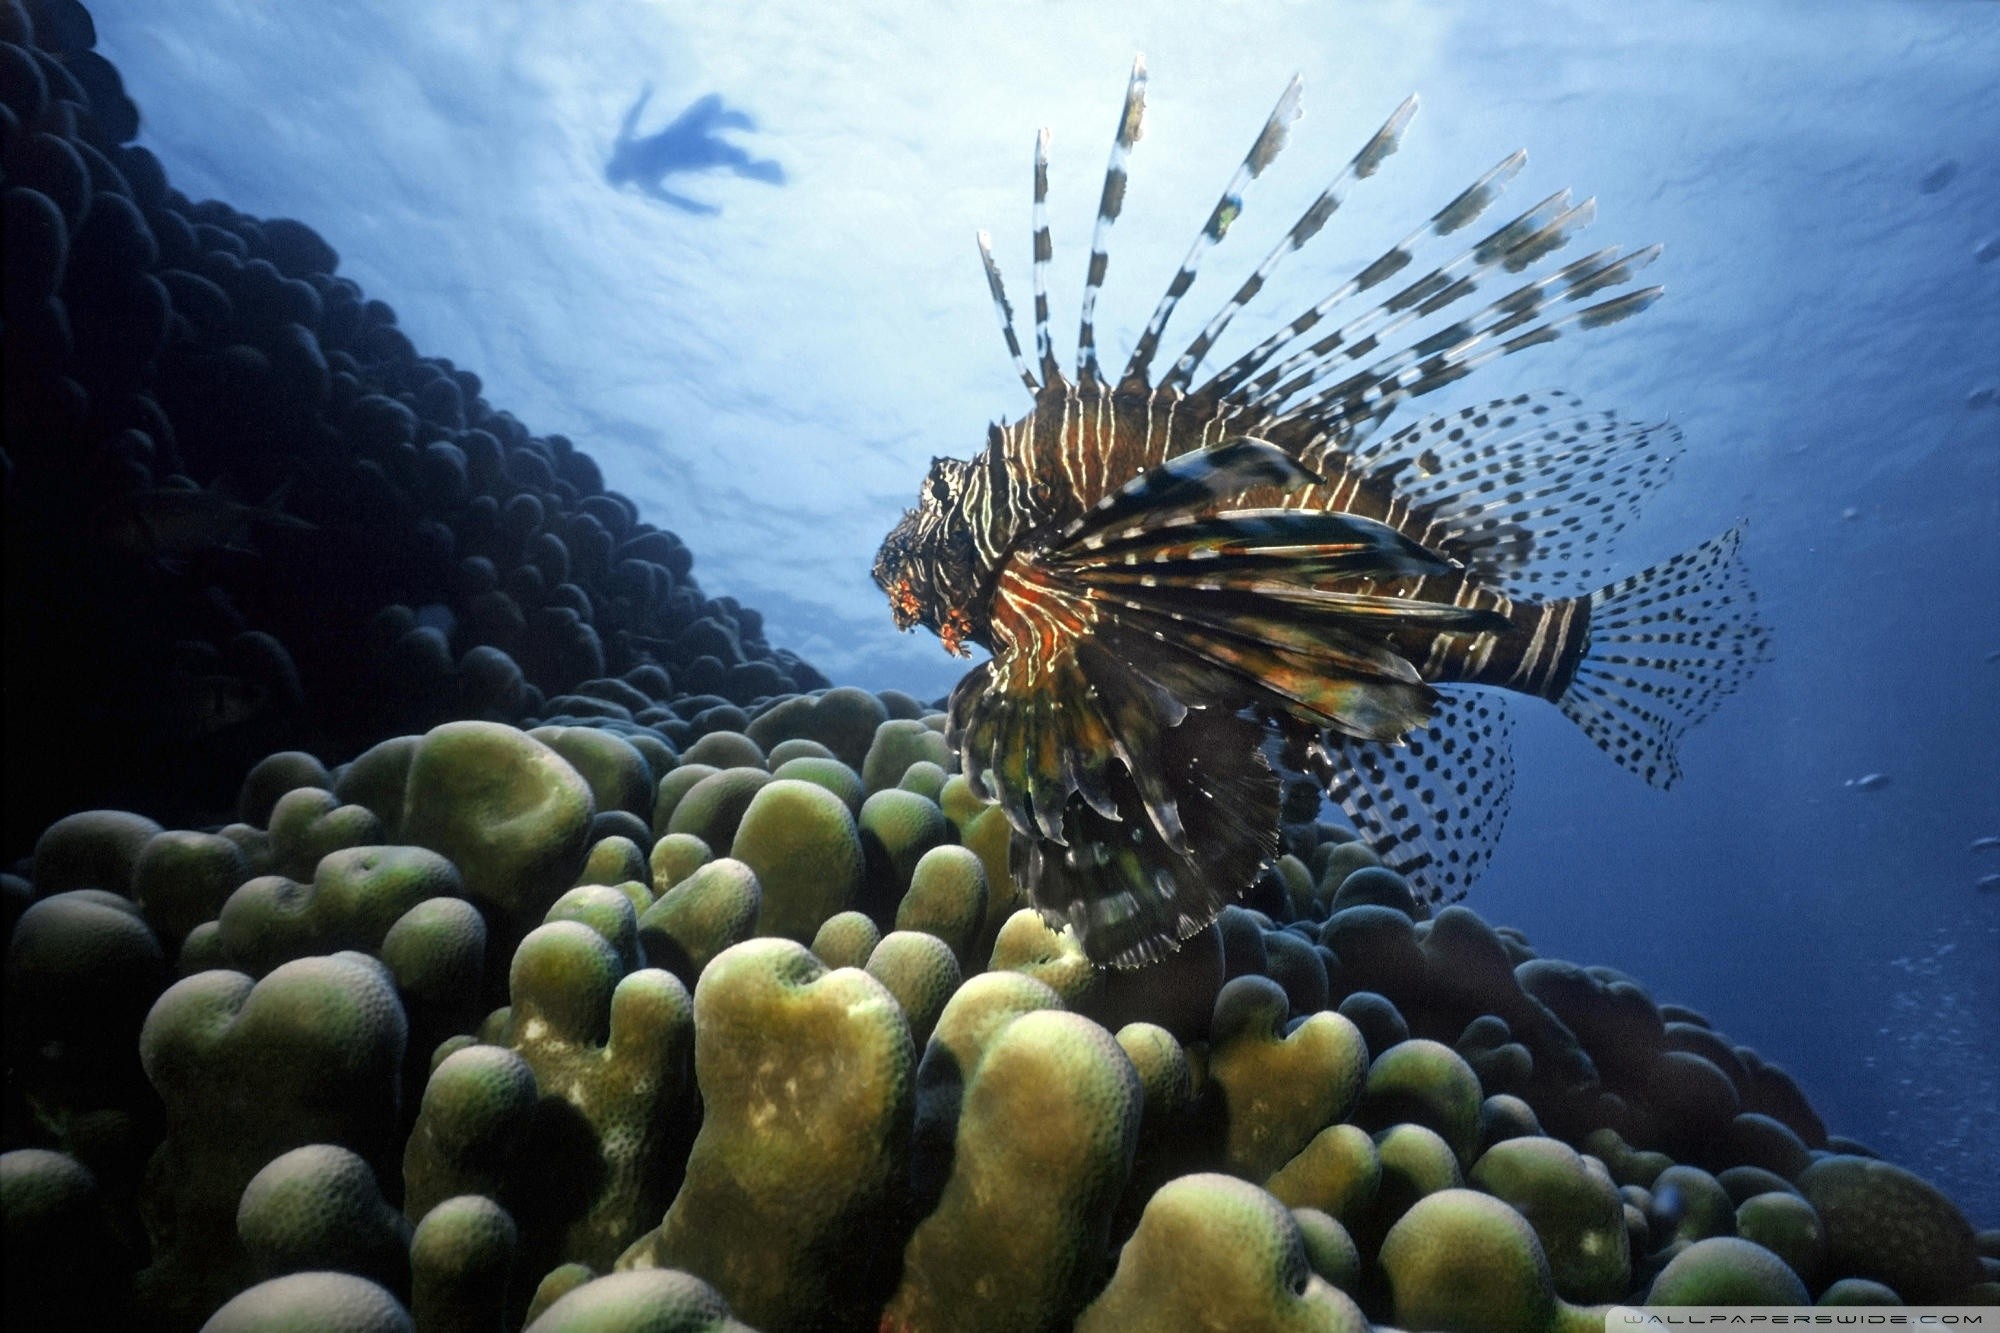 Обитатели океана рыбы. Морские обитатели. Рыбы в океане. Подводные обитатели. Обитатели Тихого океана.